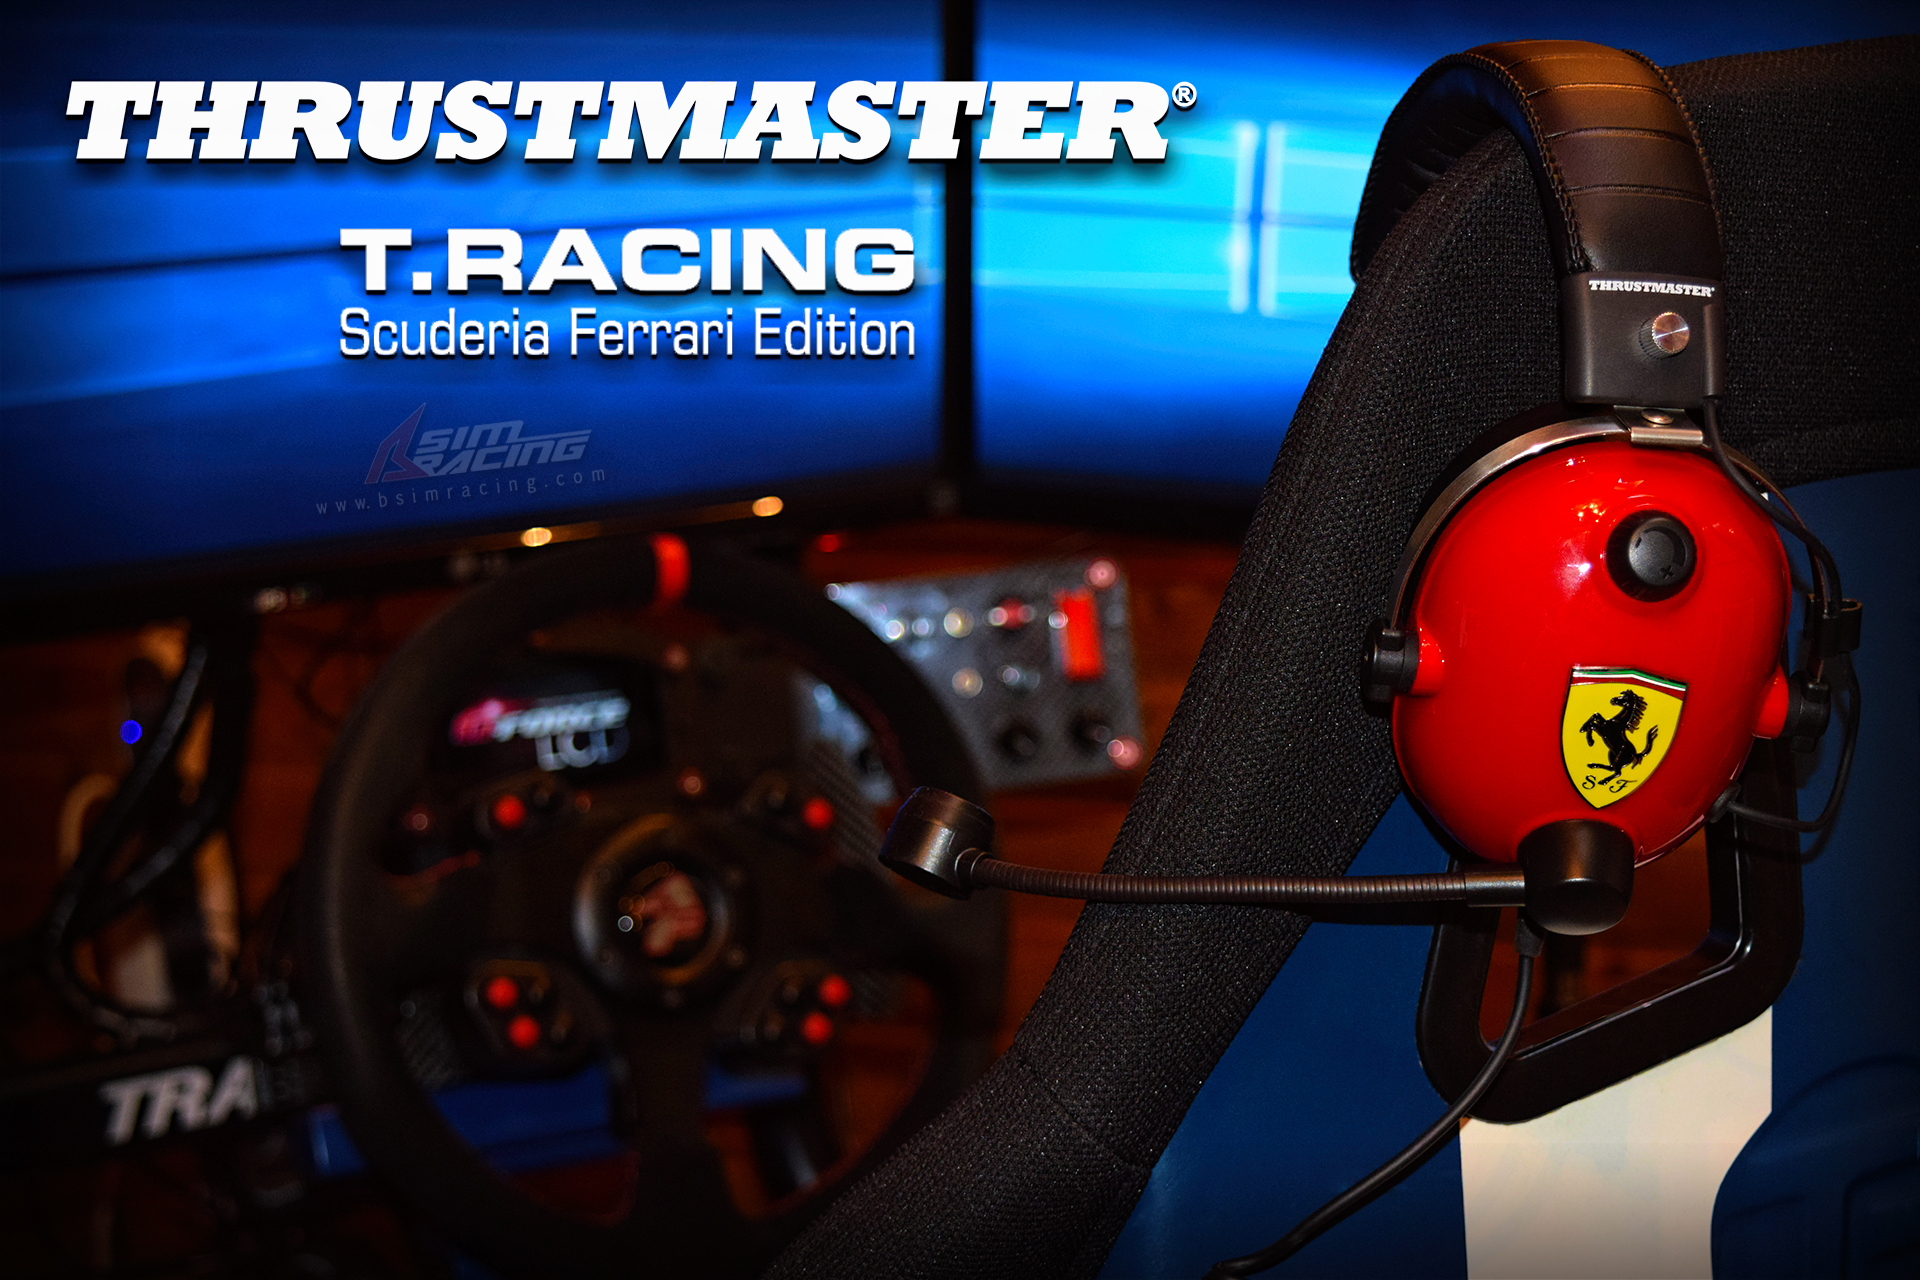 Thrustmaster T.Racing Scuderia Ferrari Edition Headset Review - Bsimracing